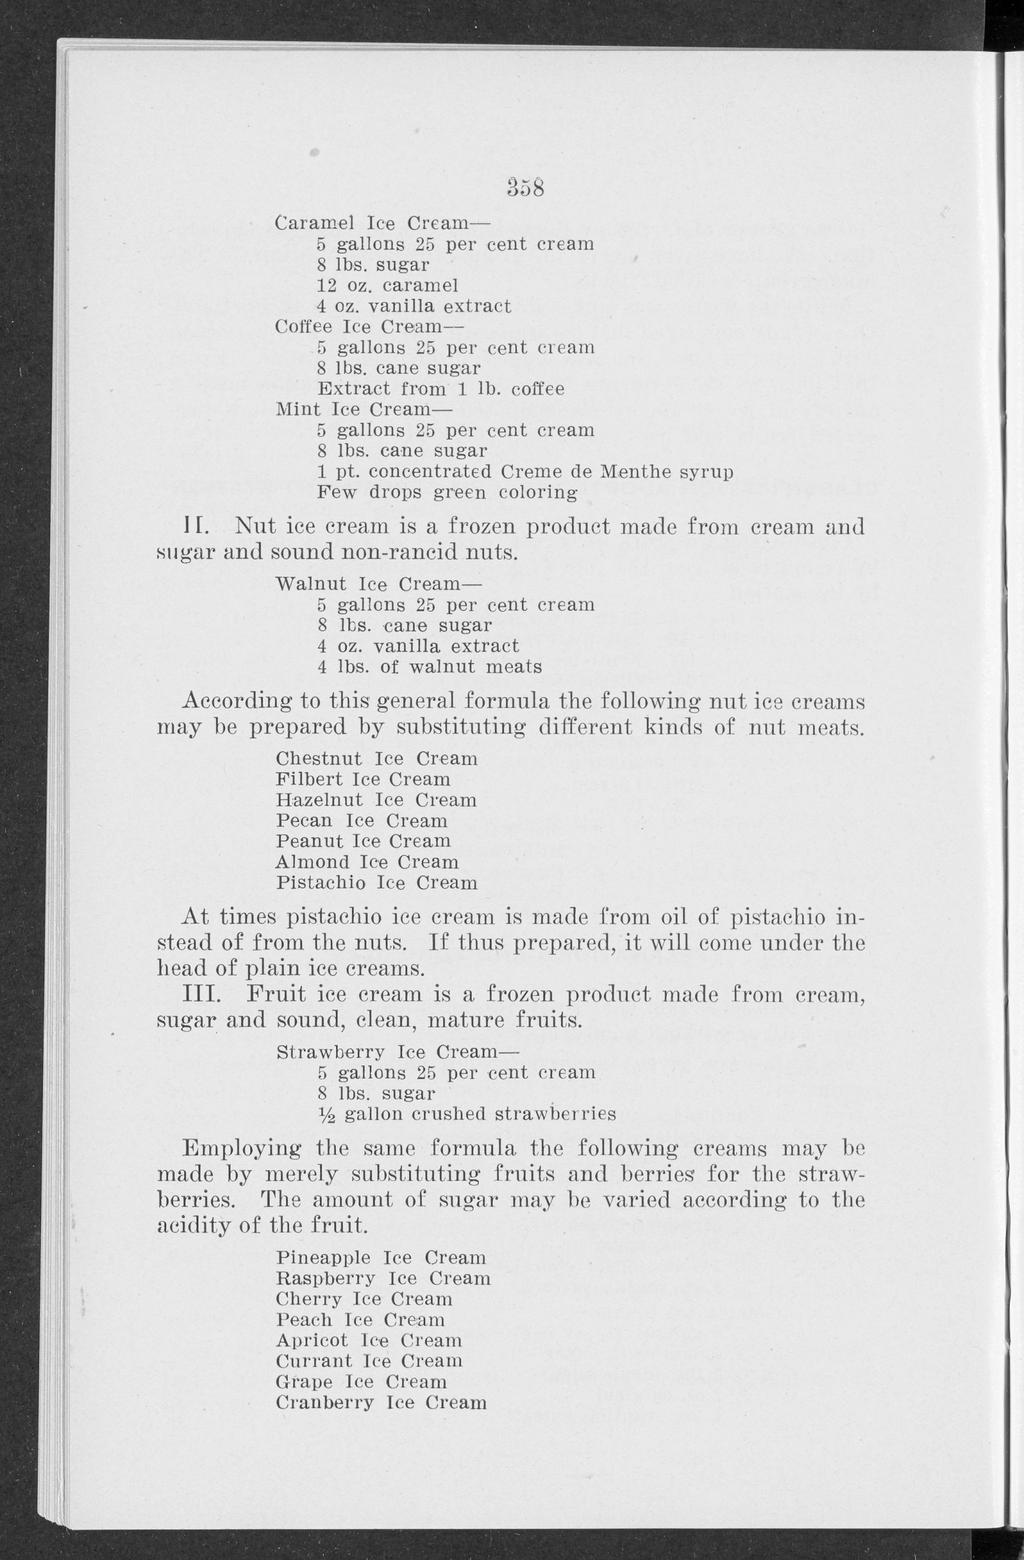 Bulletin, Vol. 10 [1910], No. 123, Art. 1 358 Caramel Ice Cream 8 lbs. sugar 12 oz. caramel Coffee Ice Cream. 8 lbs. cane sugar Extract from 1 lb. coffee Mint Ice Cream 8 lbs. cane sugar 1 pt.